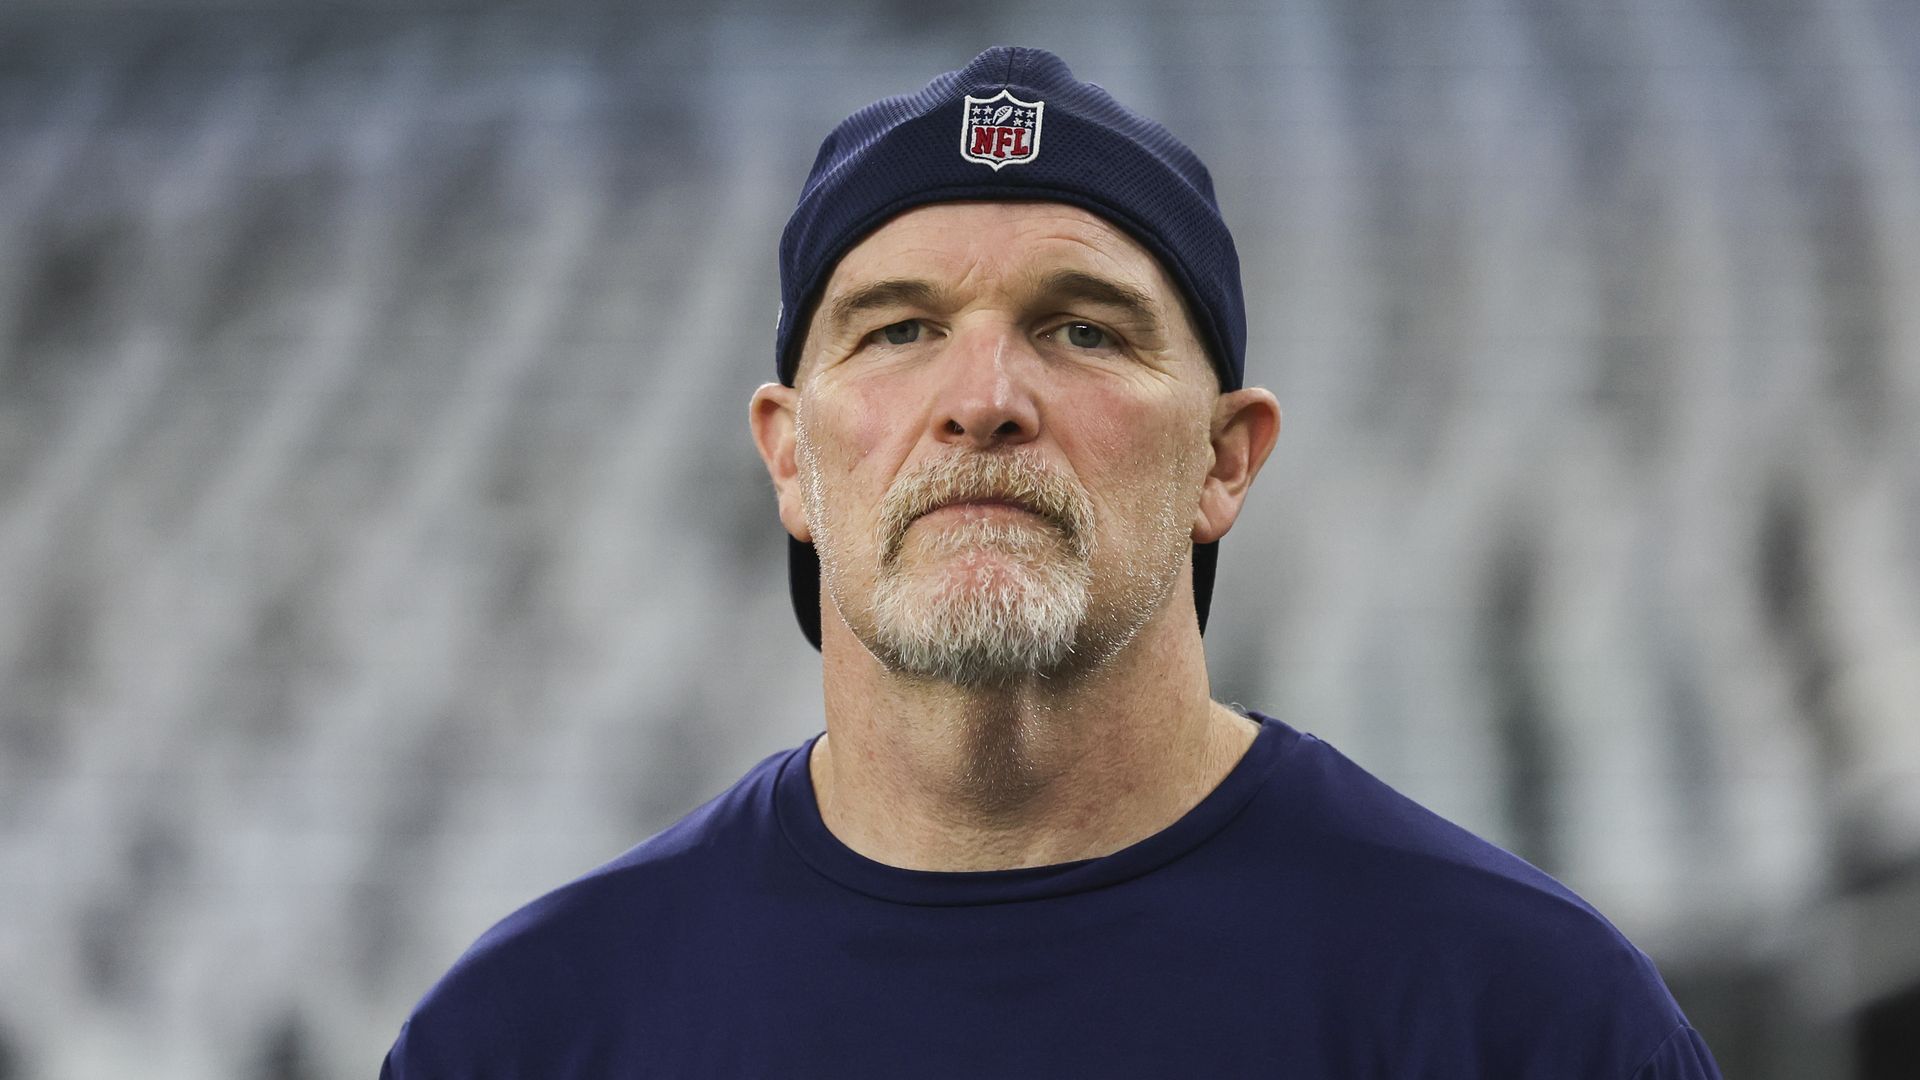 Dan Quinn looks at the camera while wearing a backwards NFL cap.